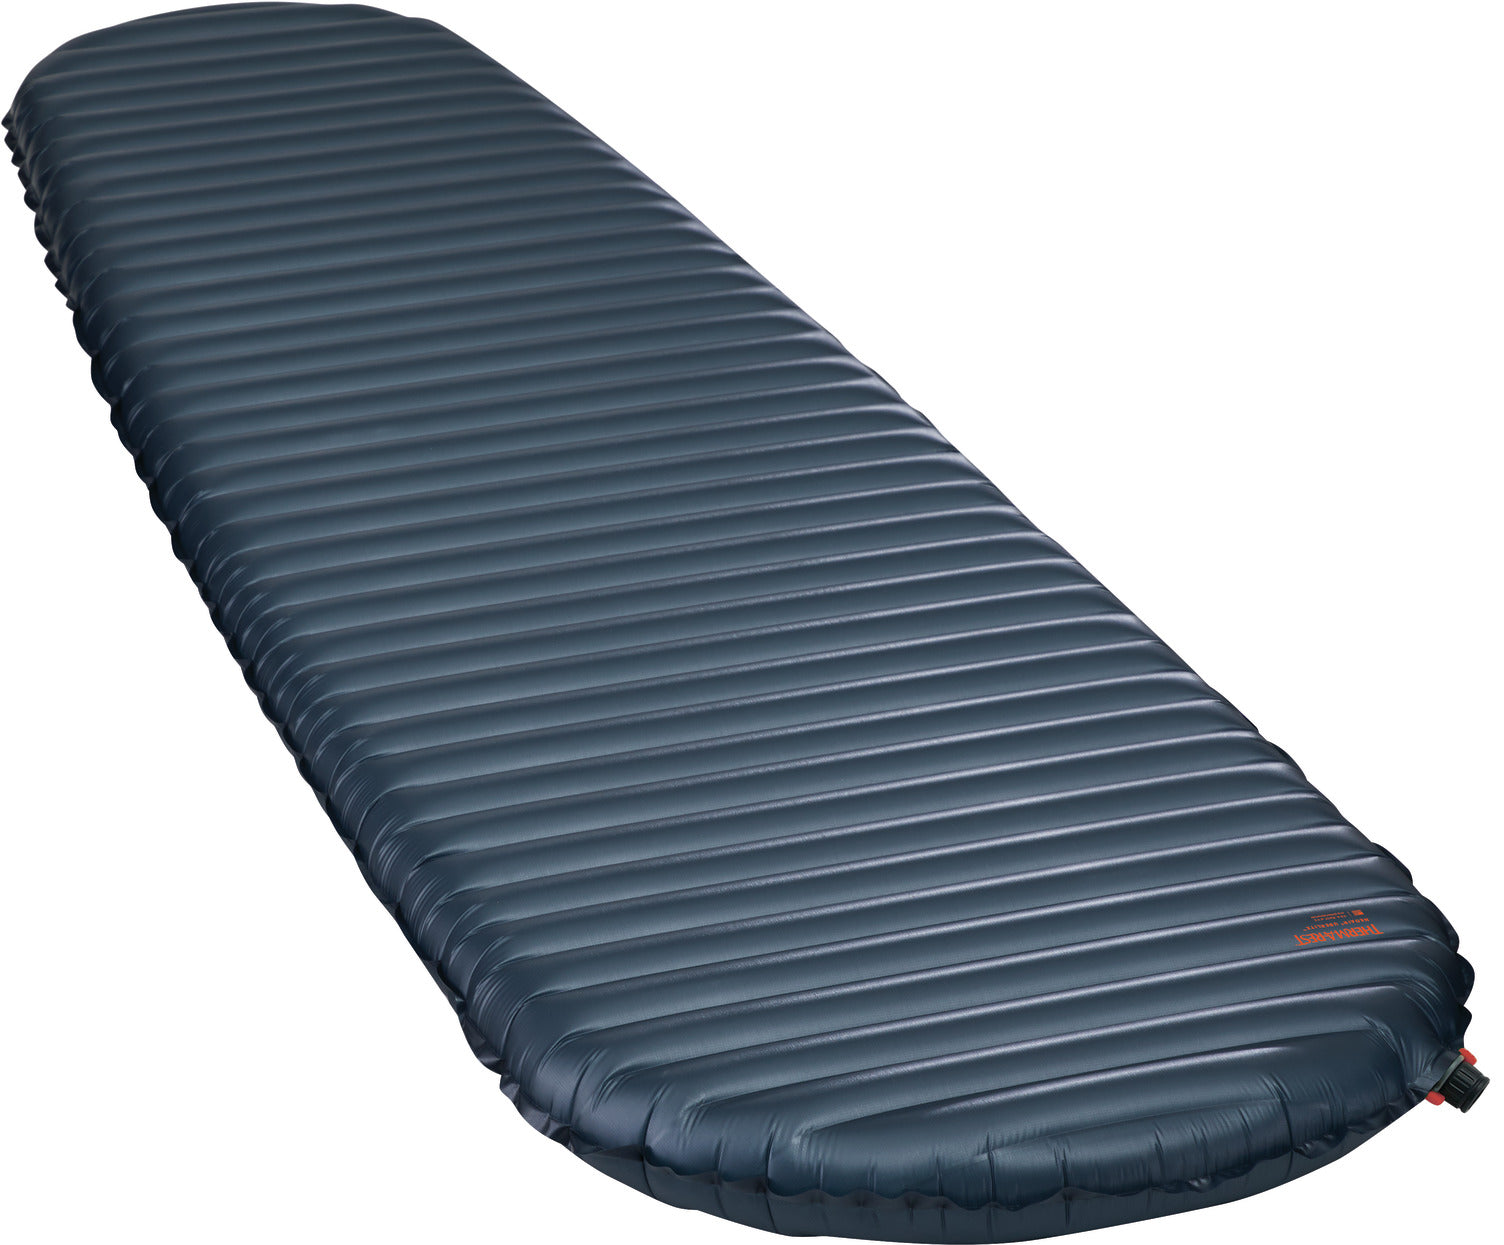 Gear Q&A: Foam vs. Inflatable Sleeping Pad For A Thru-Hike?